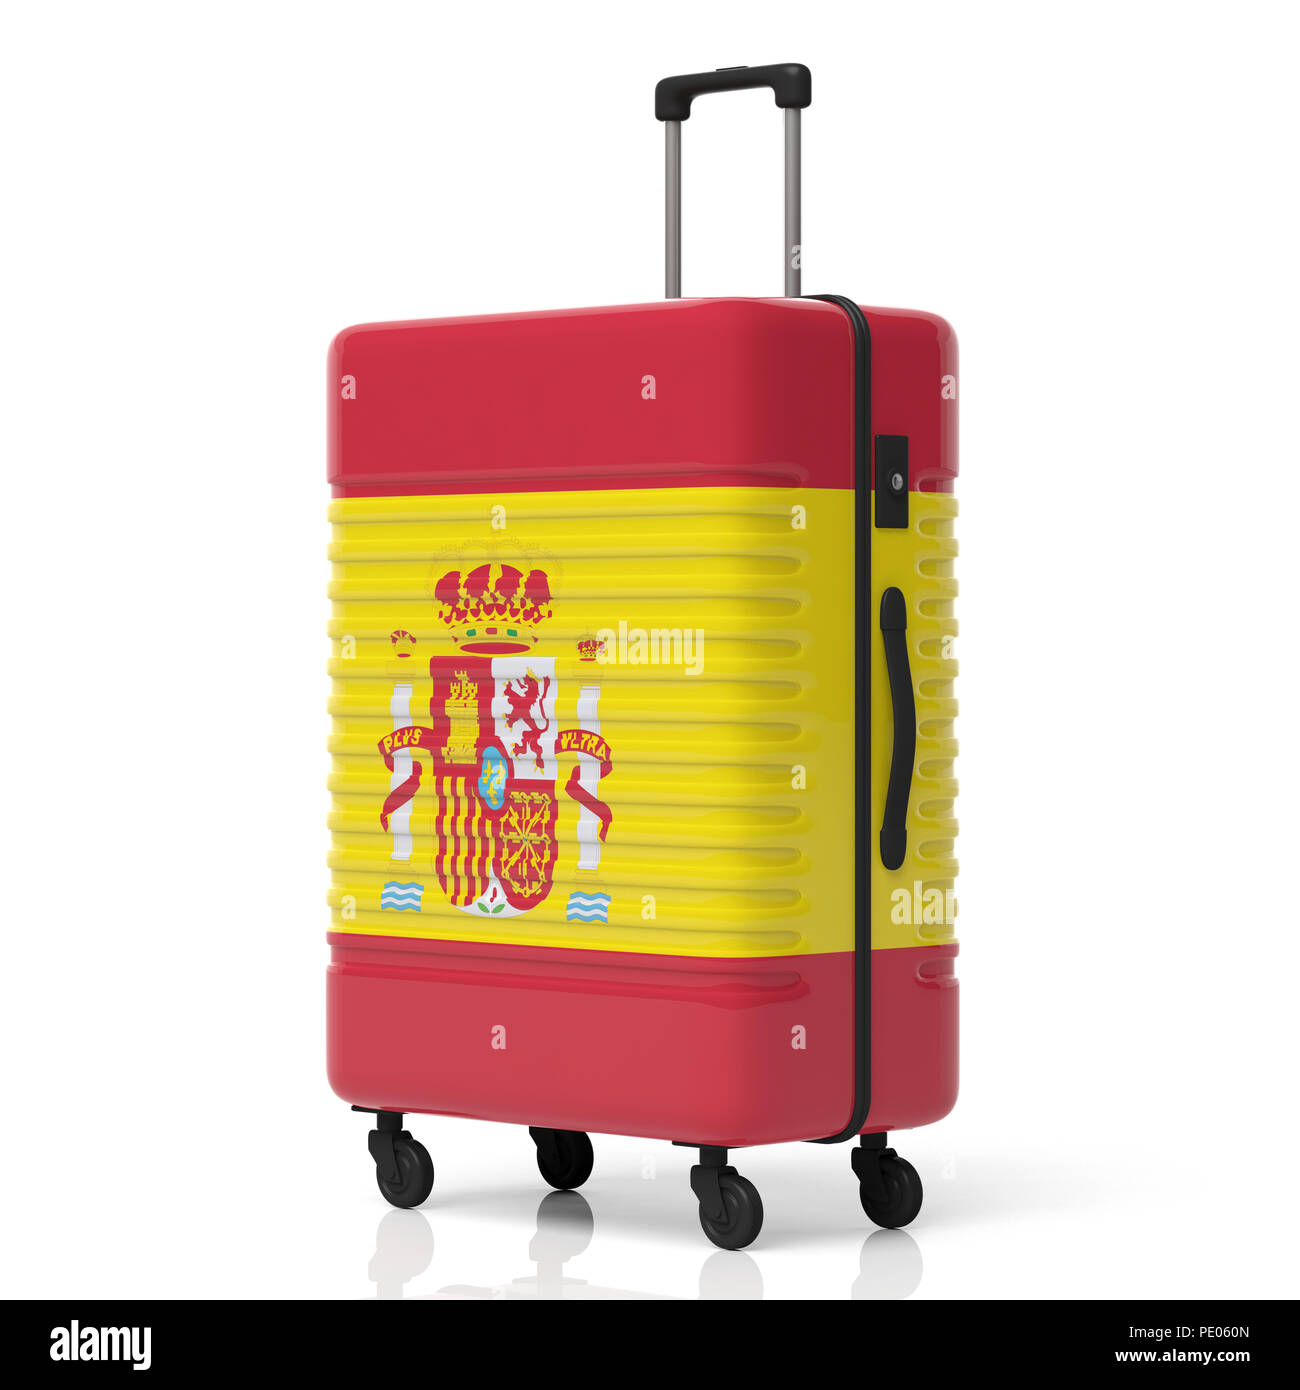 Spain Travel Destination concept. Spanish flag suitcase isolated on white background. 3d illustration Stock Photo